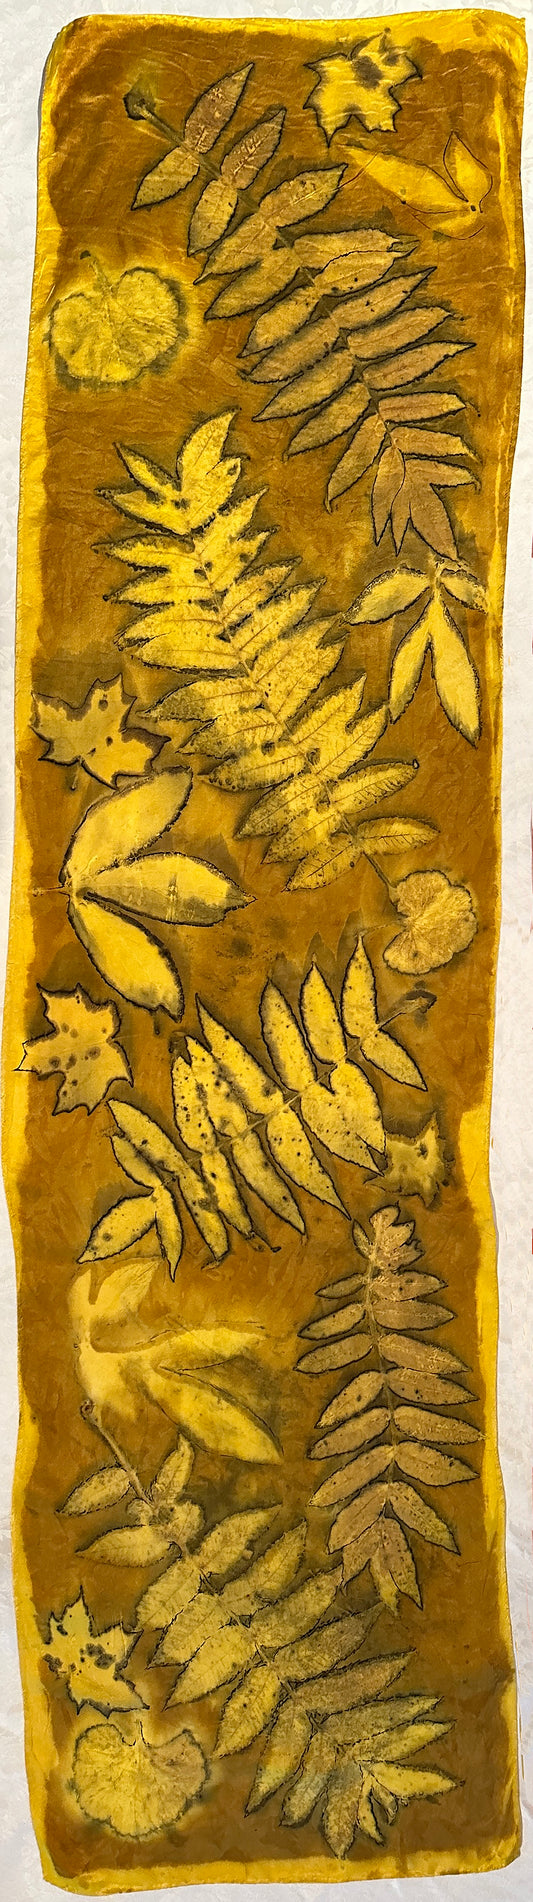 Botanical silk scarf 15" x 60" Turmeric gold_1